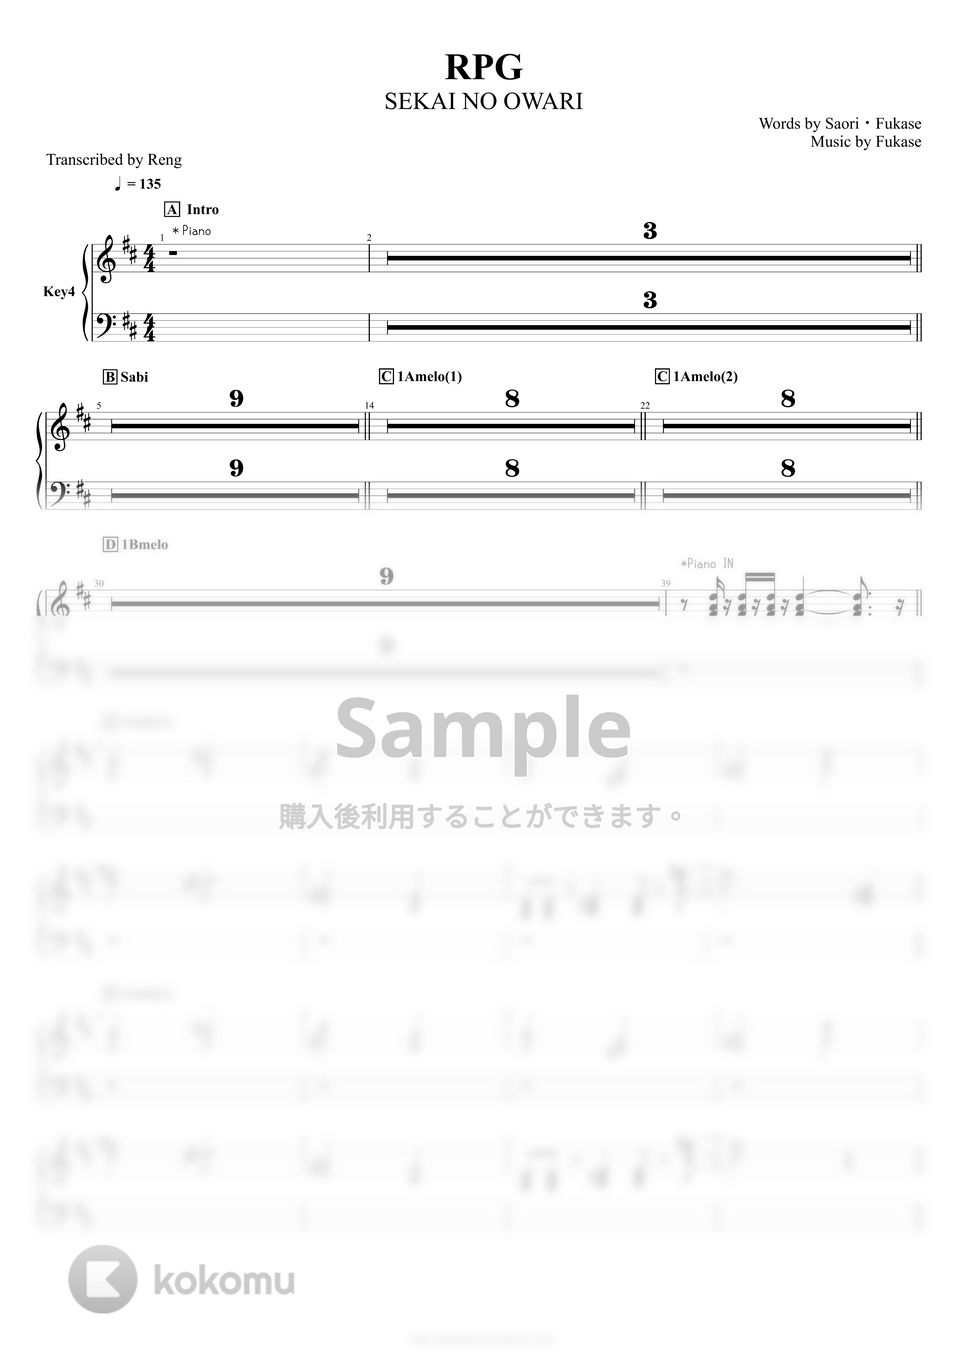 SEKAI NO OWARI - RPG (Keys/Organ/Accordion/Key/Church Organ) by Score by Reng